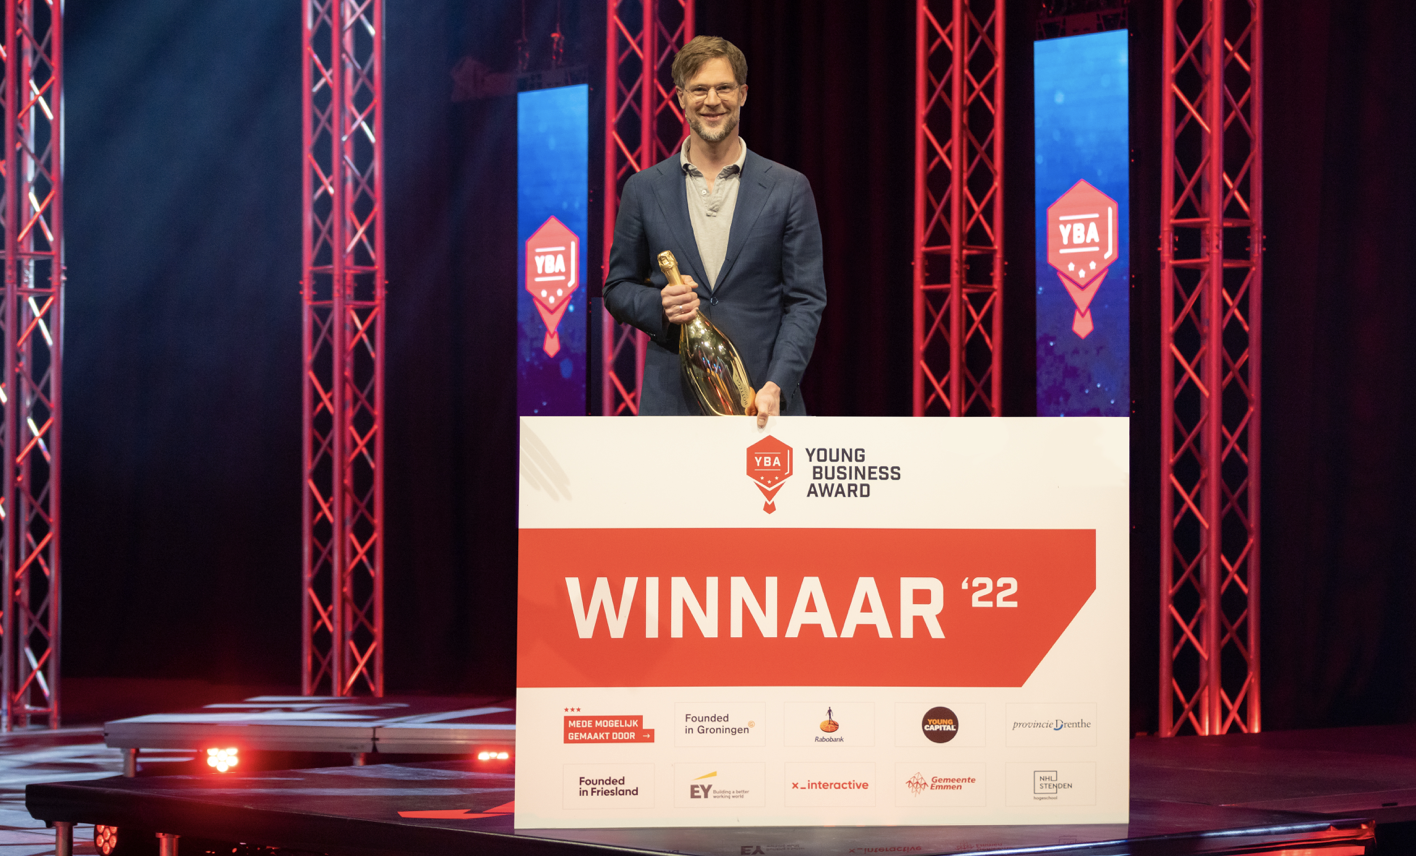 'Bijna-unicorn' BOTS wint Young Business Award